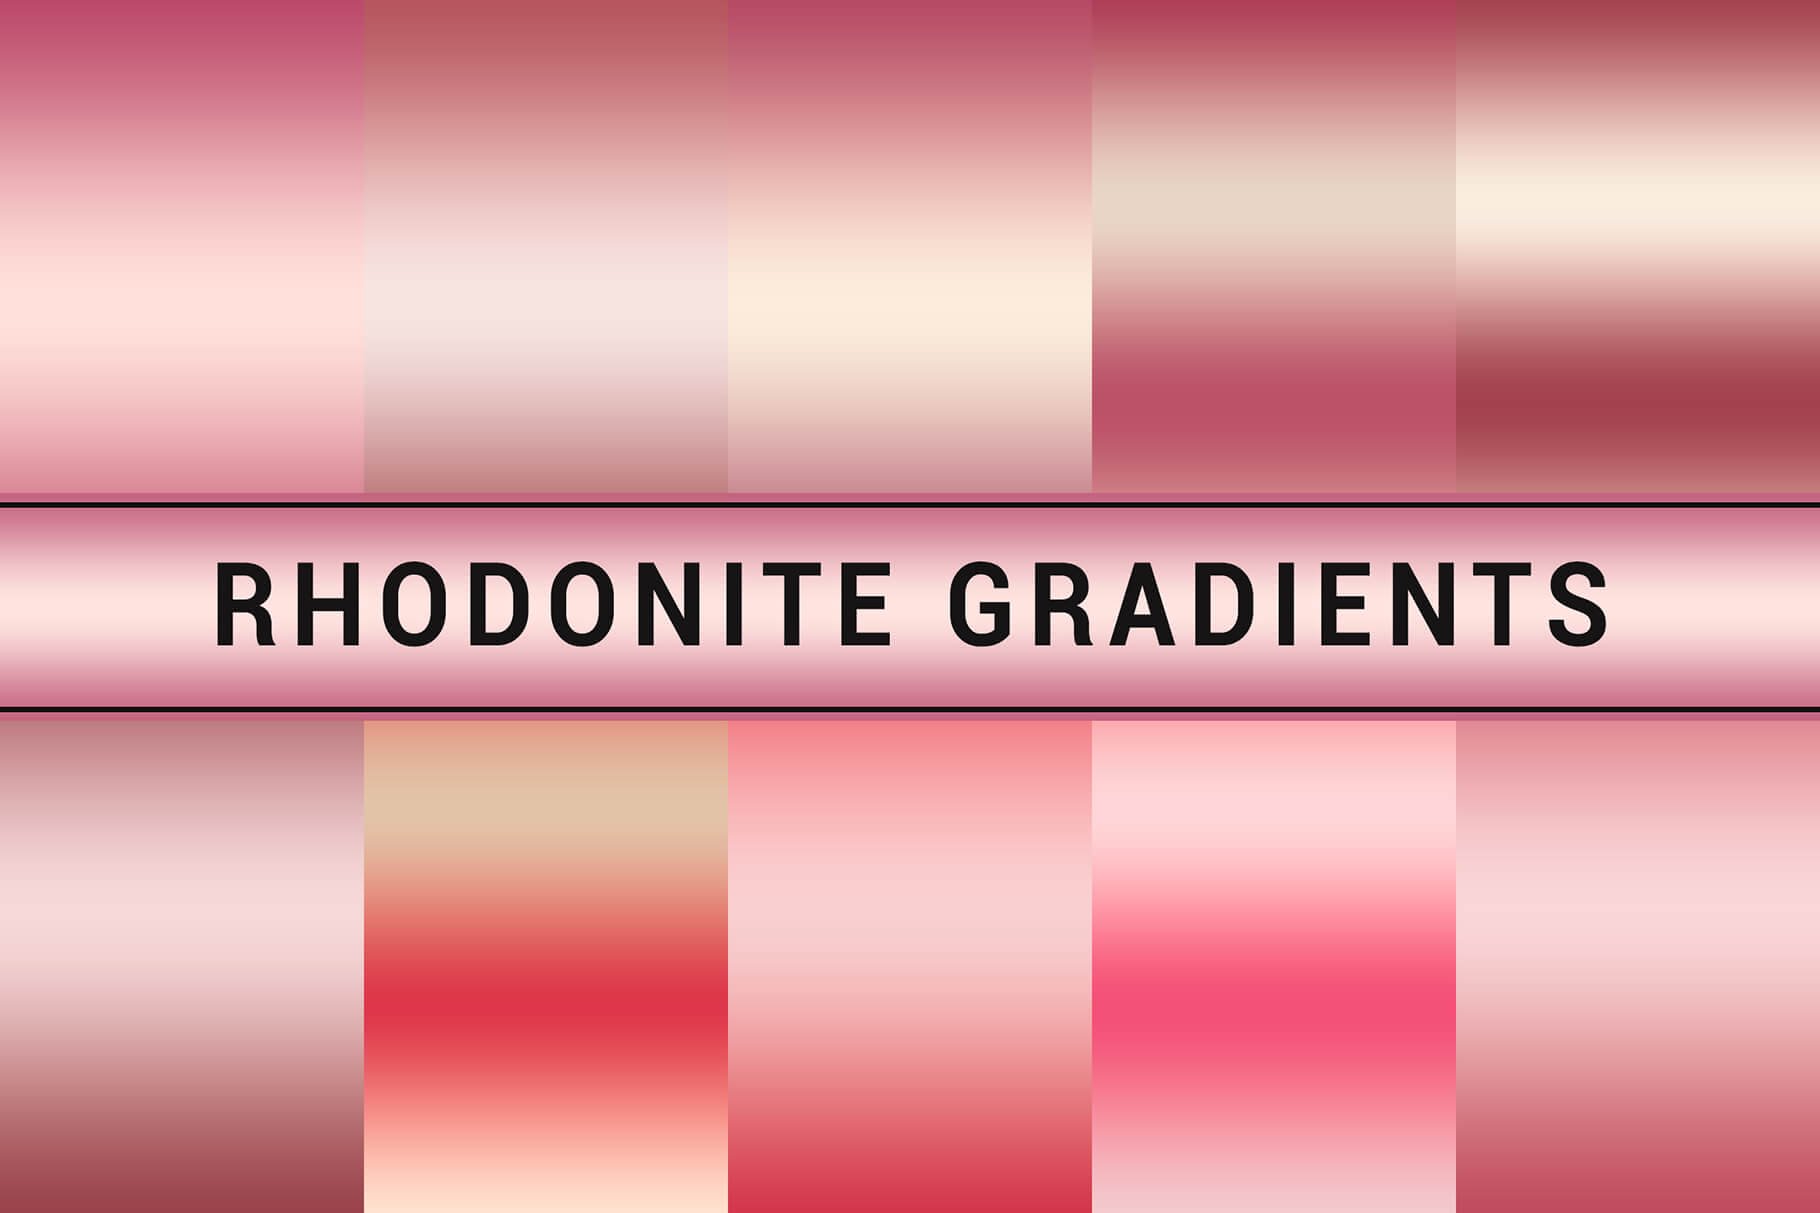 Rhodonite Gradientscover image.